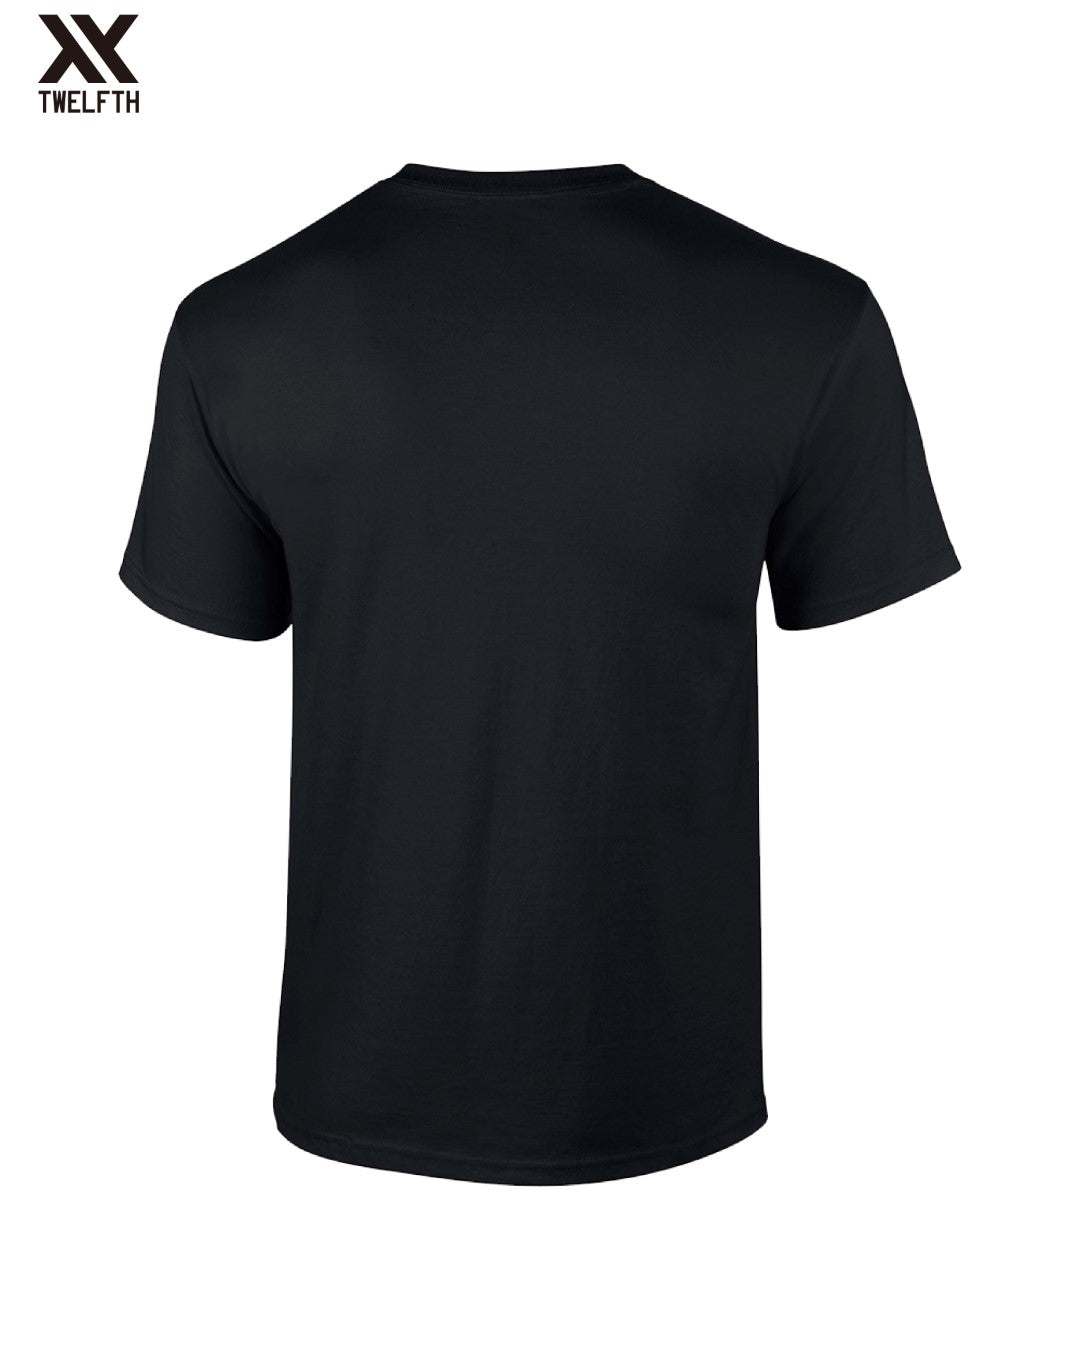 Portugal Crest T-Shirt - Mens